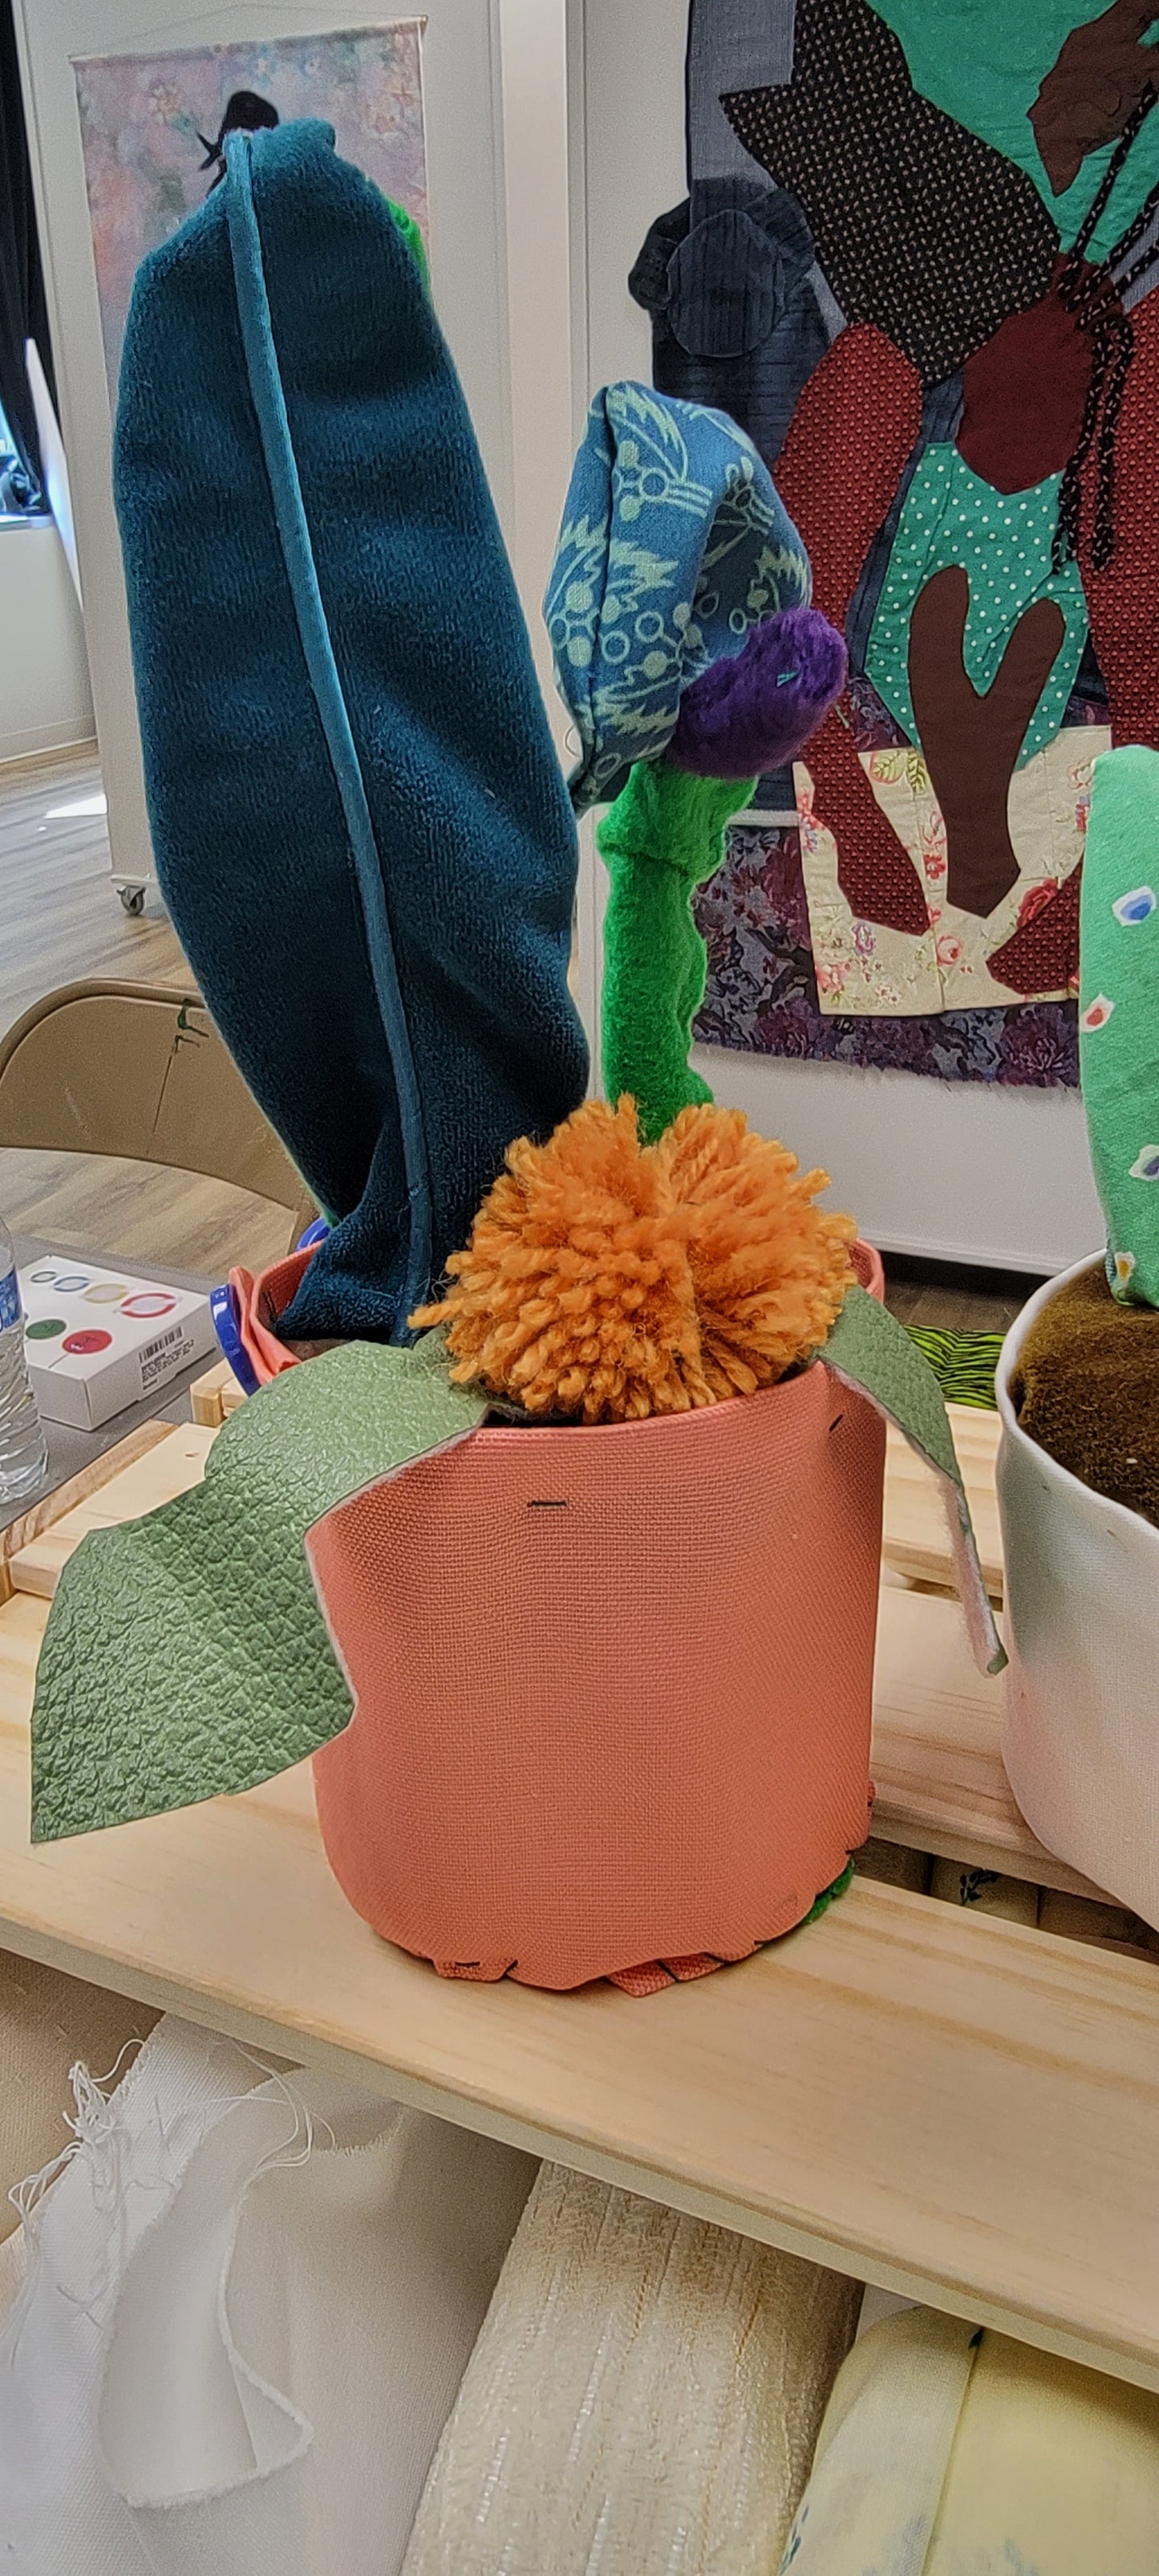 Community Workshop: Make a Fabric Flower with Jasmine Best